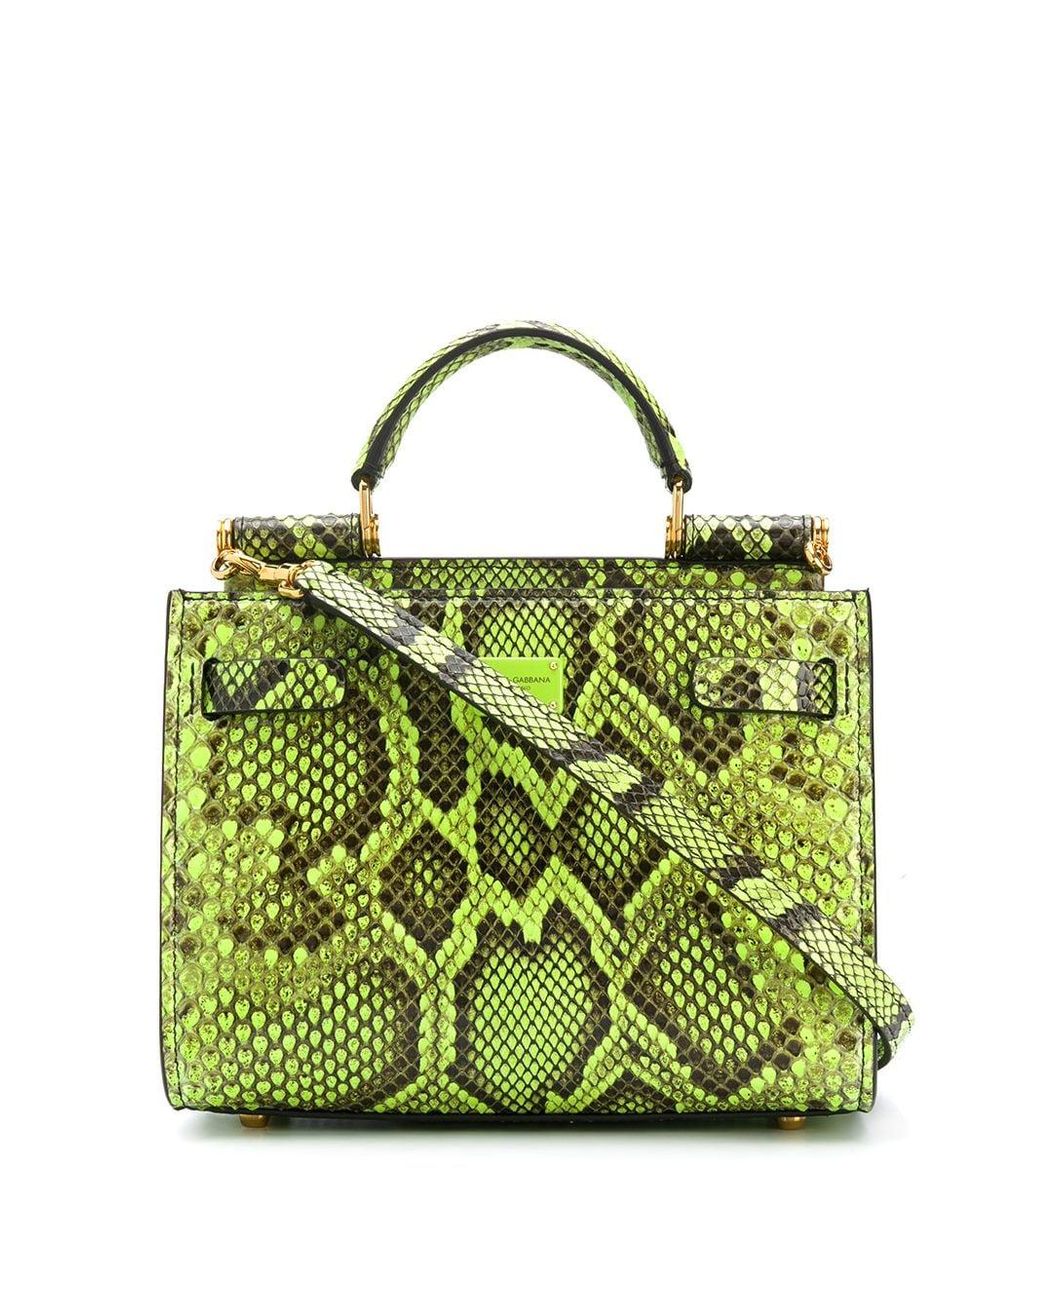 Dolce & Gabbana Snake-print Leather Handbag in Green | Lyst